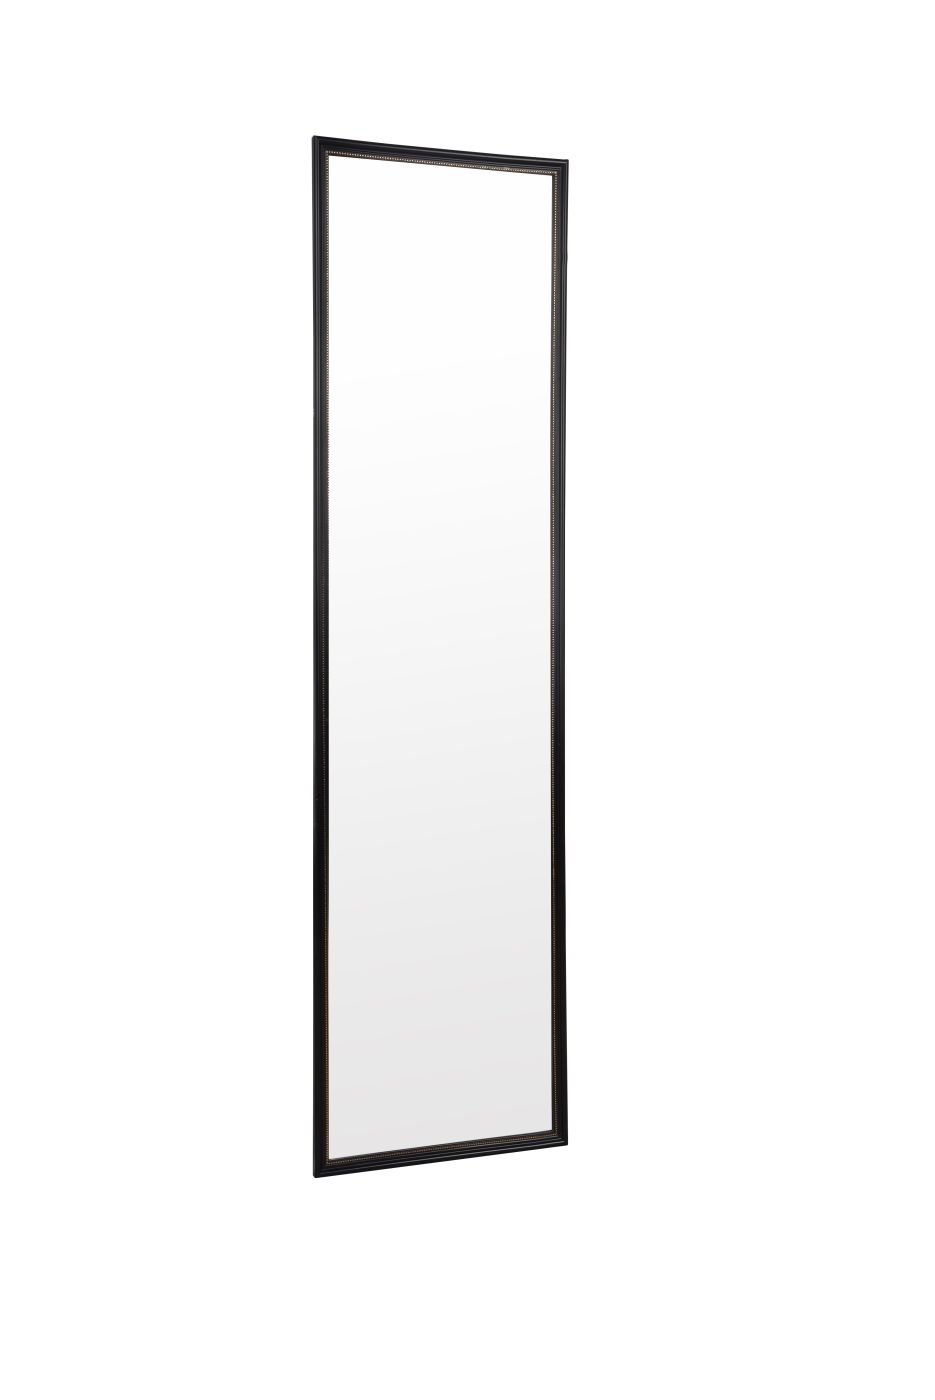 Rahmenspiegel NADINE, schwarz/gold, 33,5x125 cm